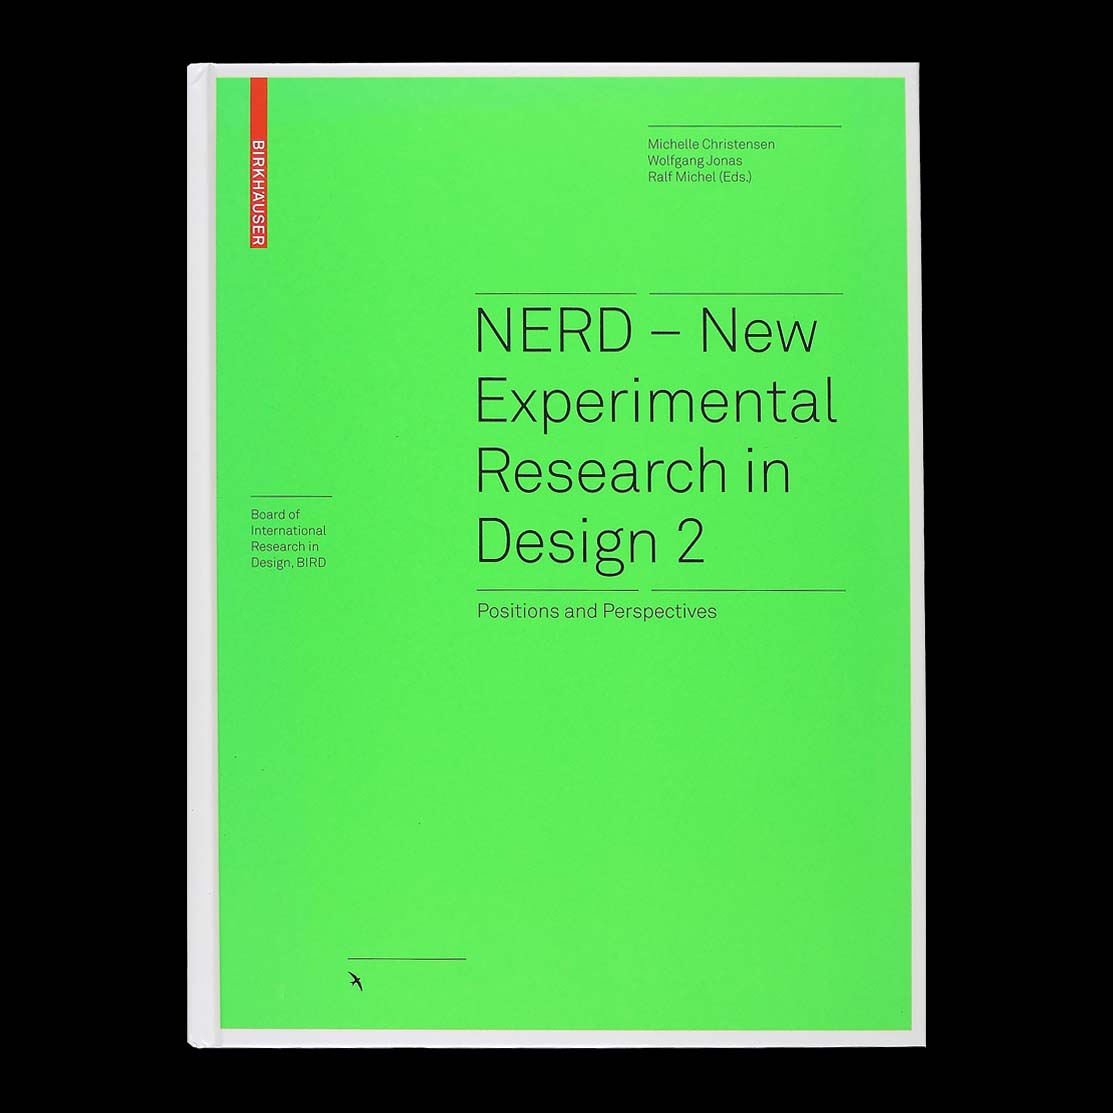 NERD - New Experimental Research in Design 2